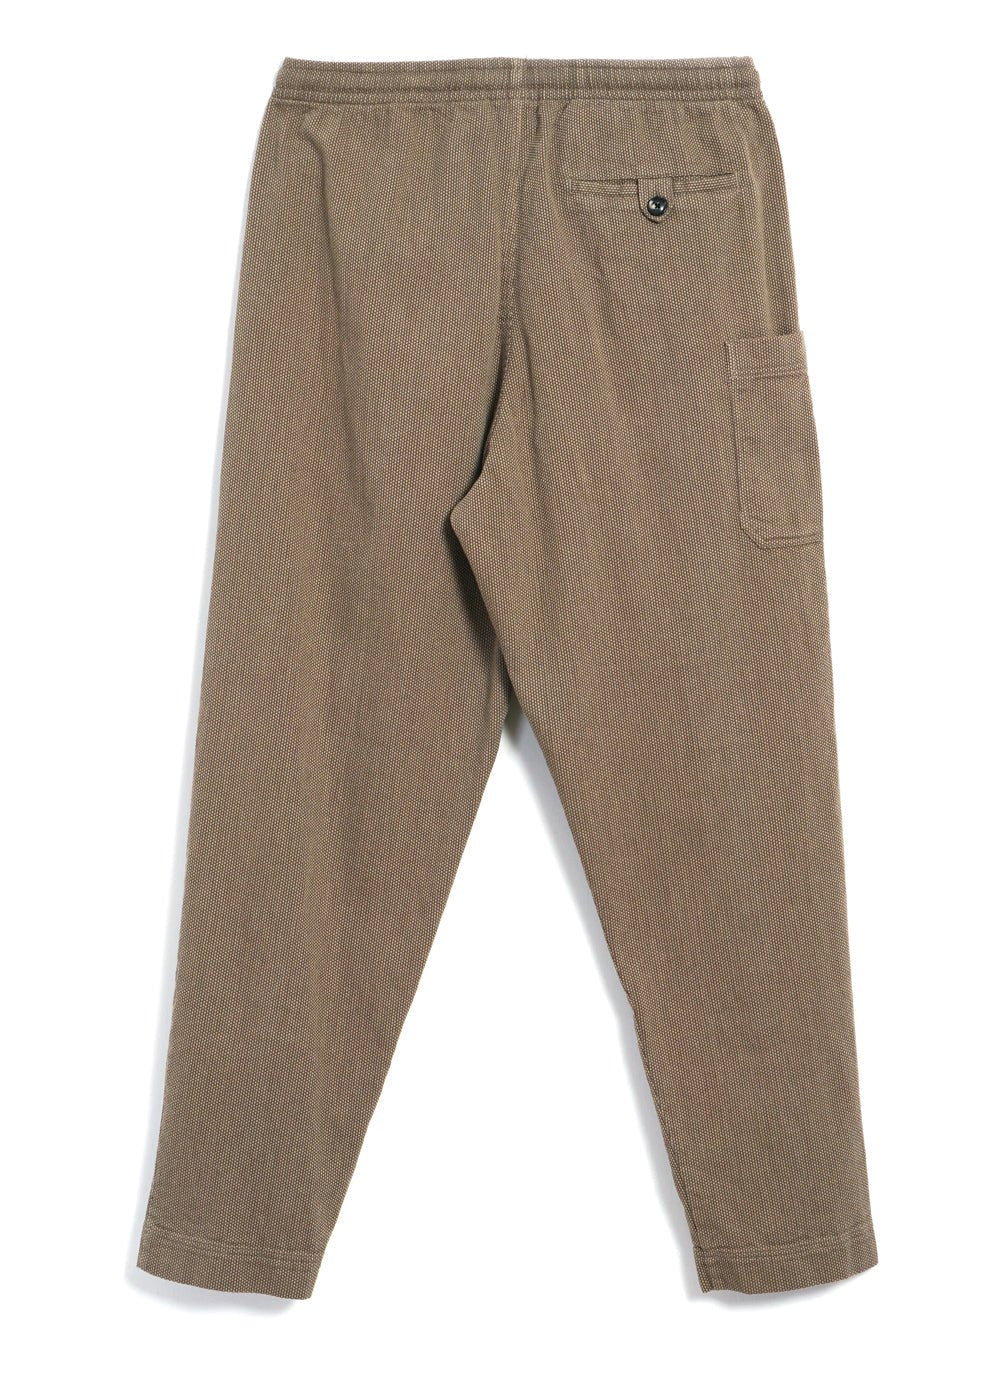 HANSEN GARMENTS - JACK | Casual Drawstring Pants | Khaki Sashiko - HANSEN Garments